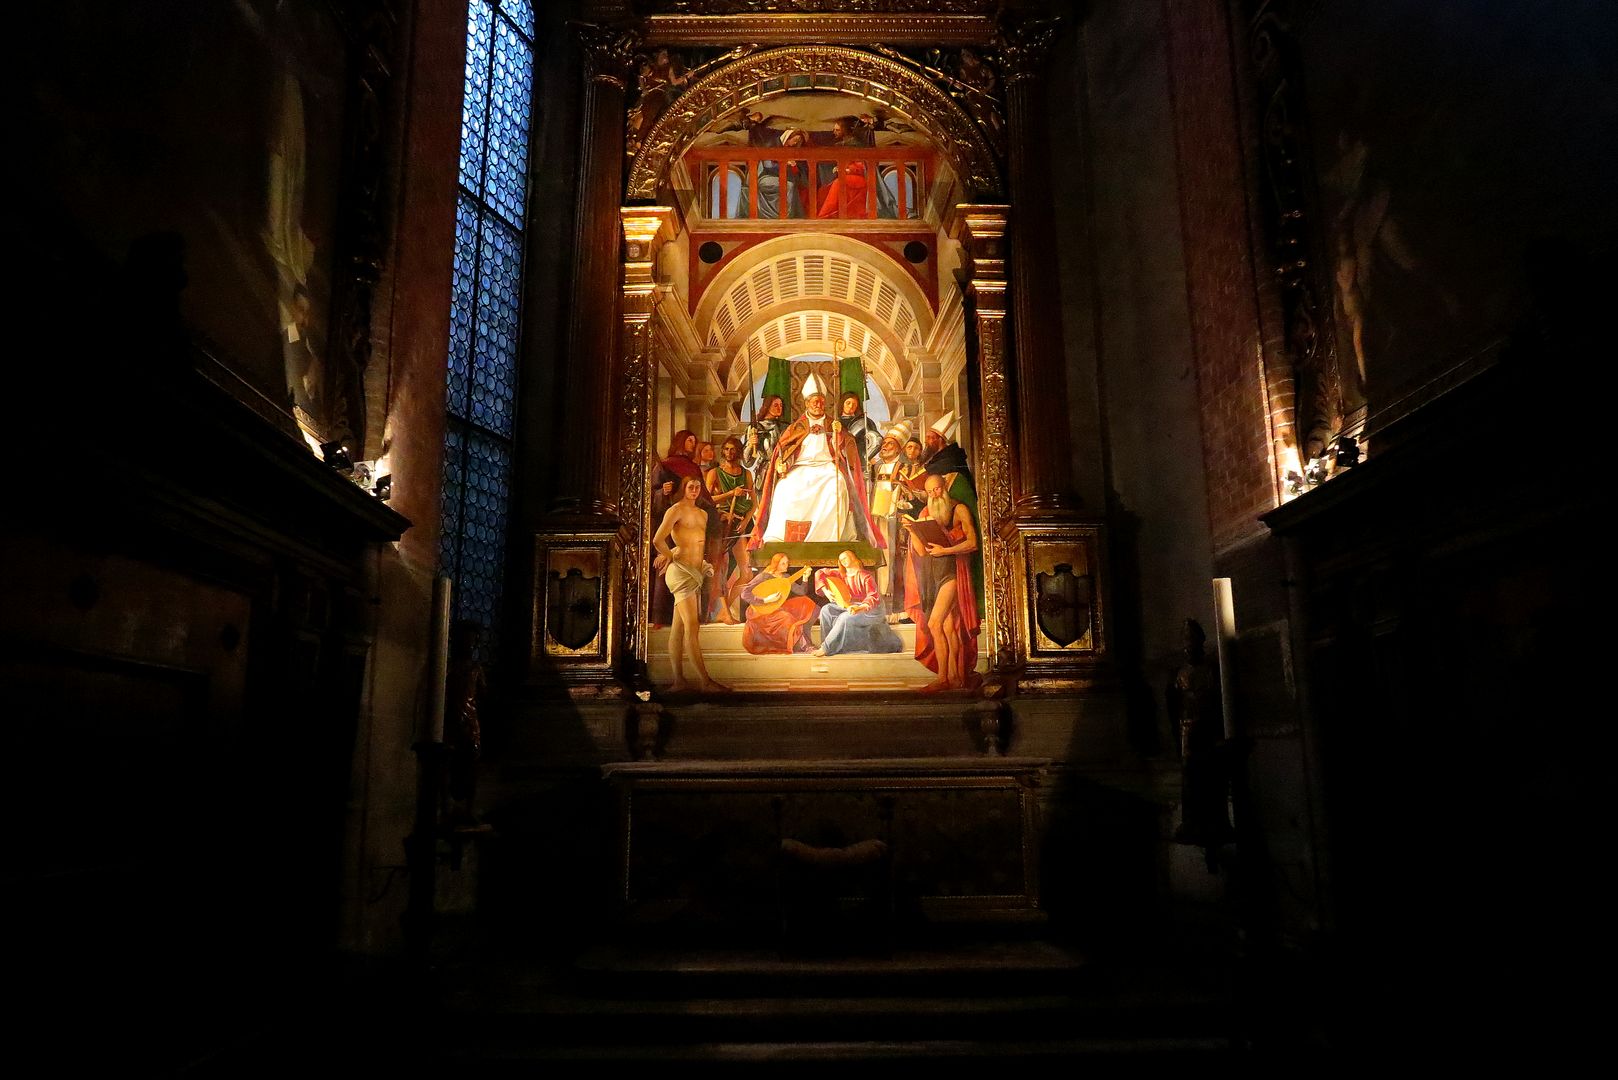 Benátky_Santa Maria Gloriosa dei Frari_Alvise Vivarini, Marco Basaiti_sv. Ambrož na trůně_1503